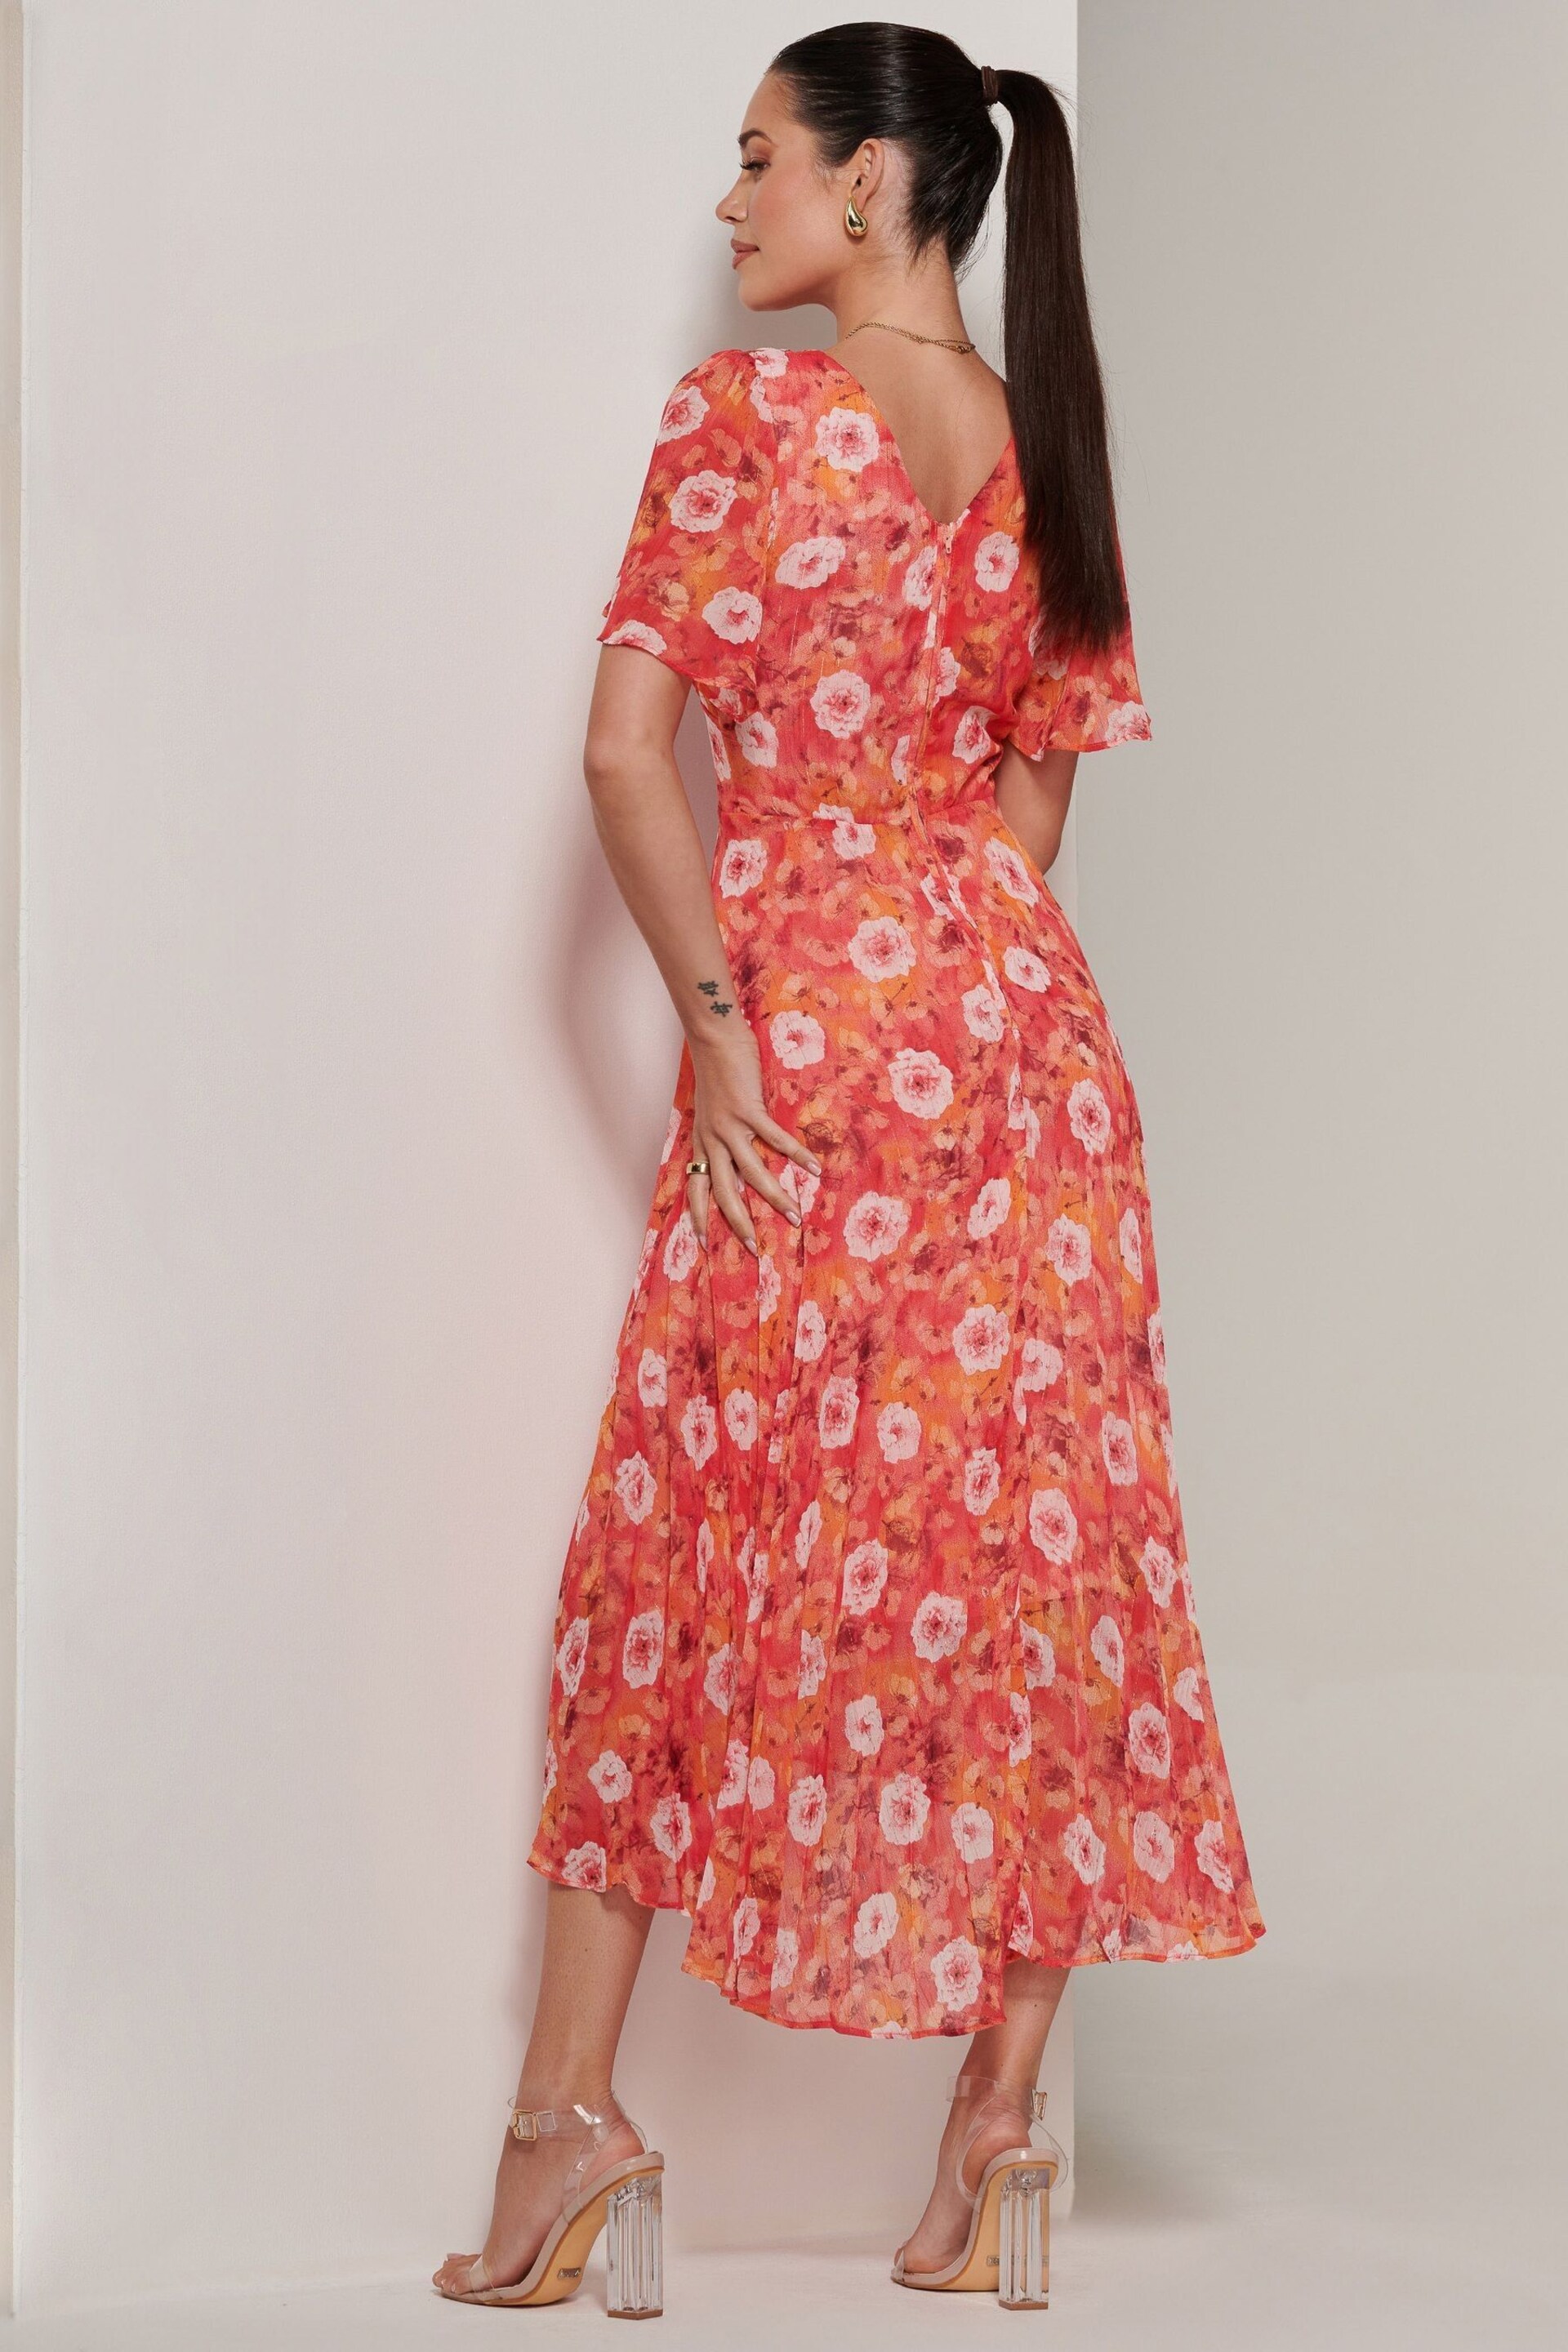 Jolie Moi Orange Floral Pleated Dip Hem Chiffon Maxi Dress - Image 2 of 6